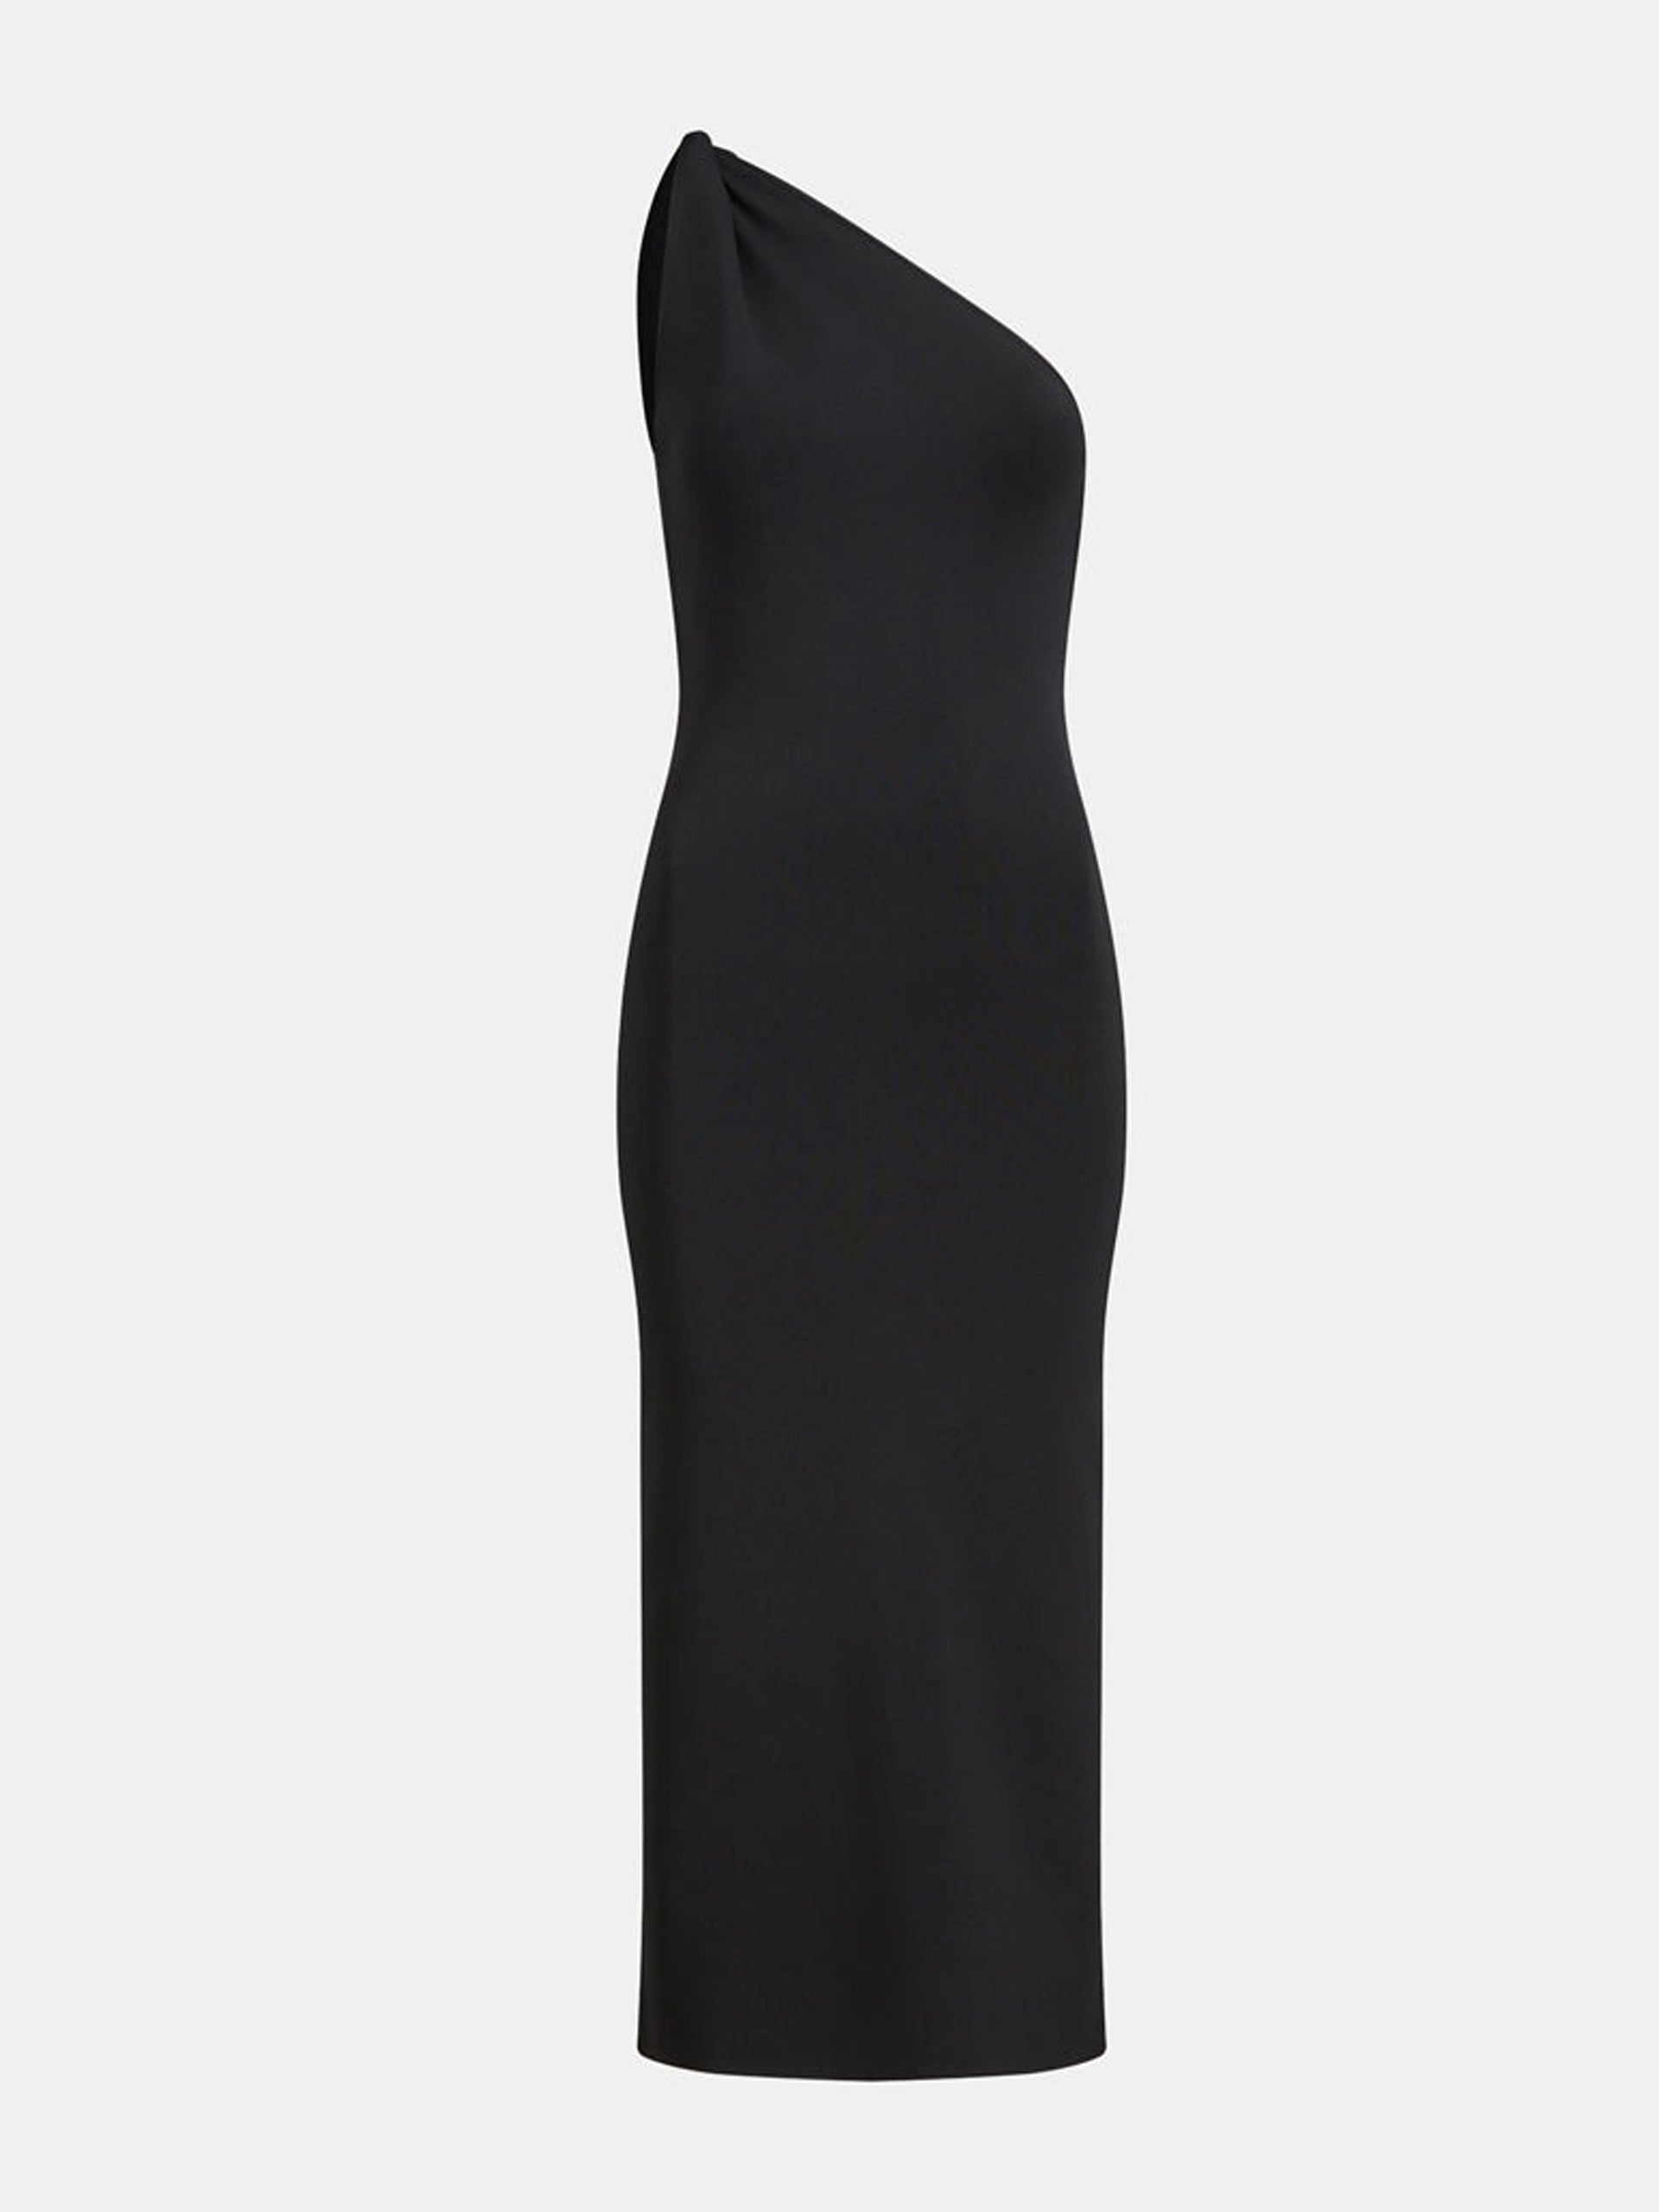 Persephone black dress - Collagerie.com